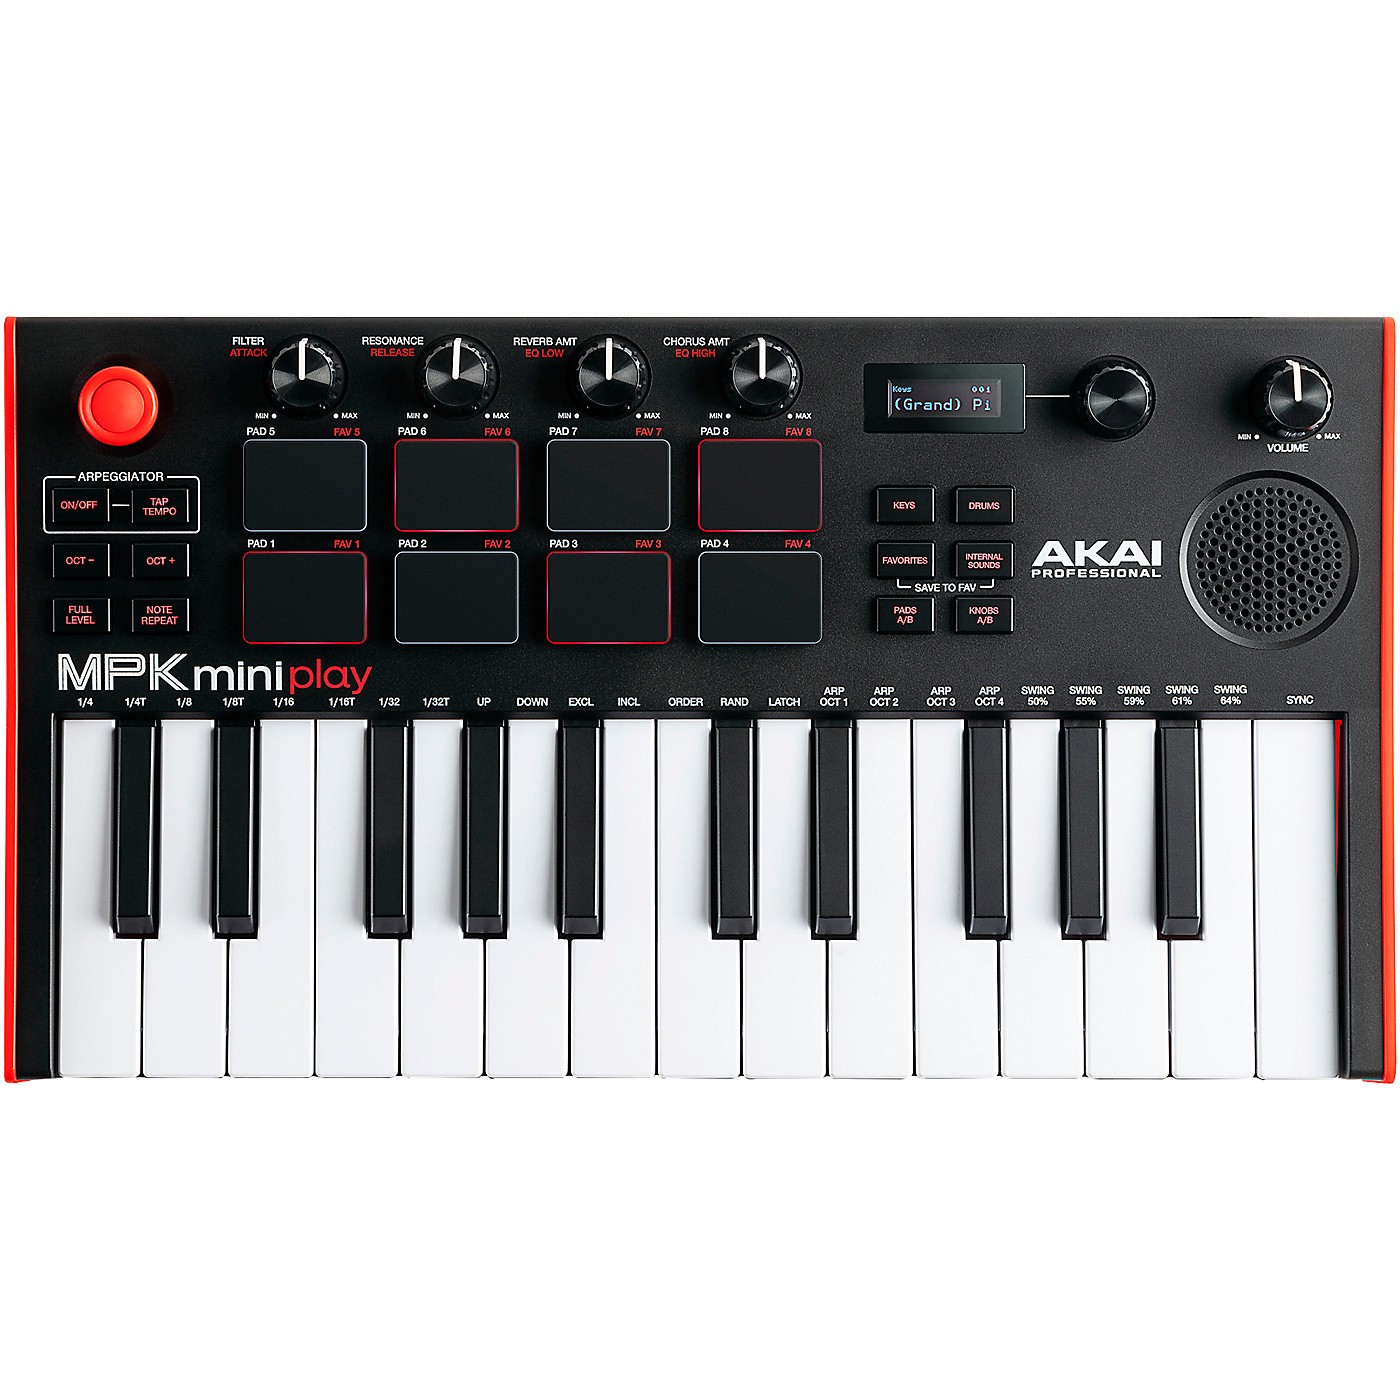 Akai Professional MPK mini play mk3 Mini Controller Keyboard With Built-in Speaker thumbnail